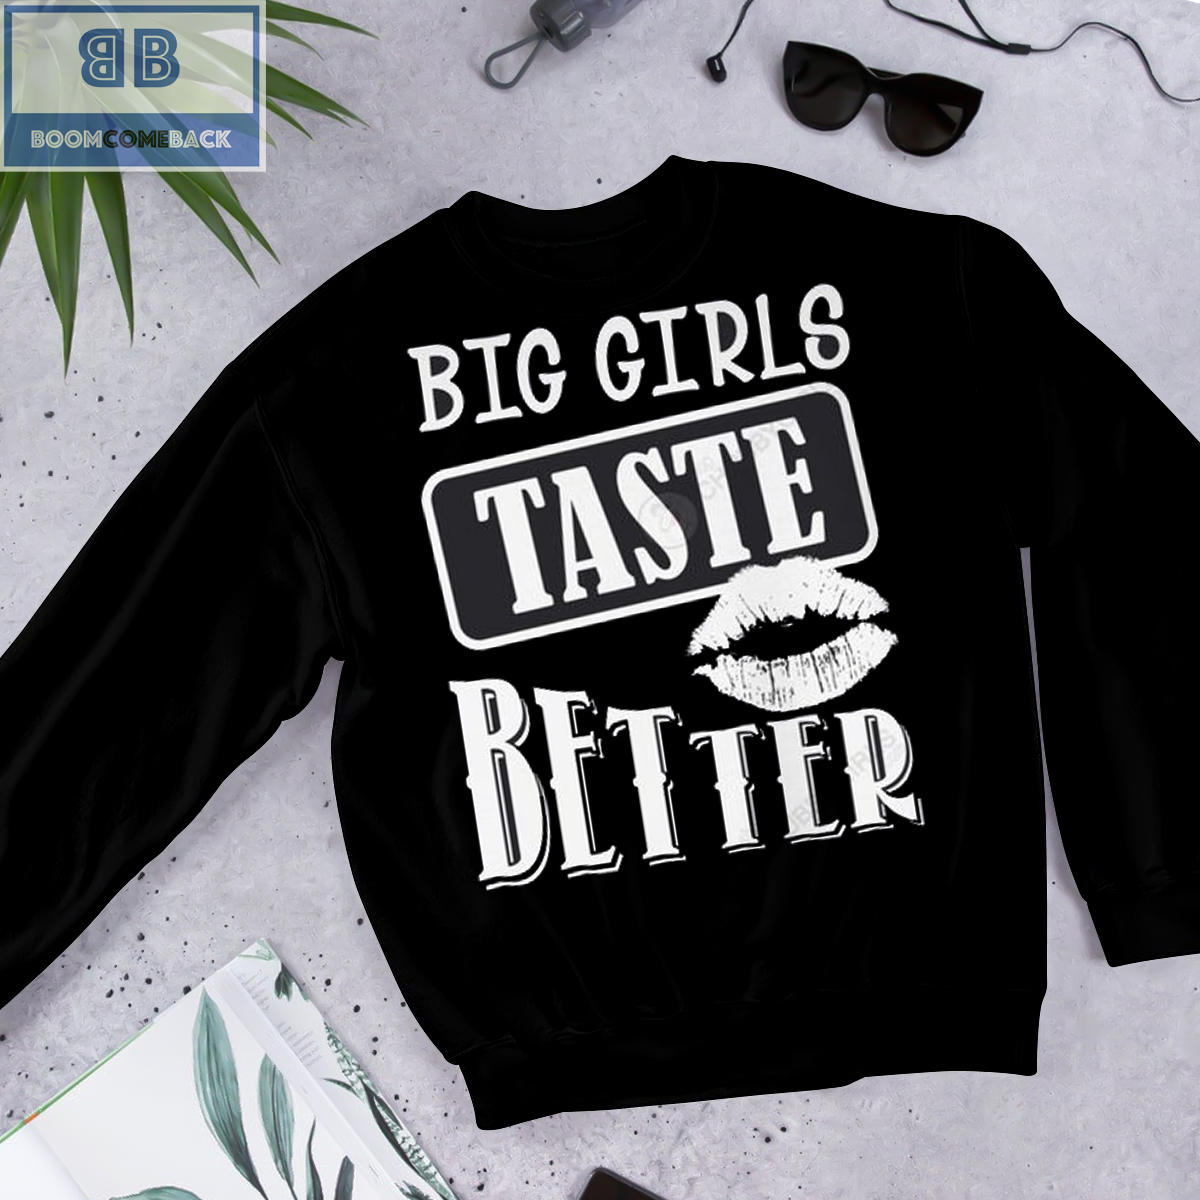 Lips Big Girls Taste Better Crewneck Shirt and Sweatshirt